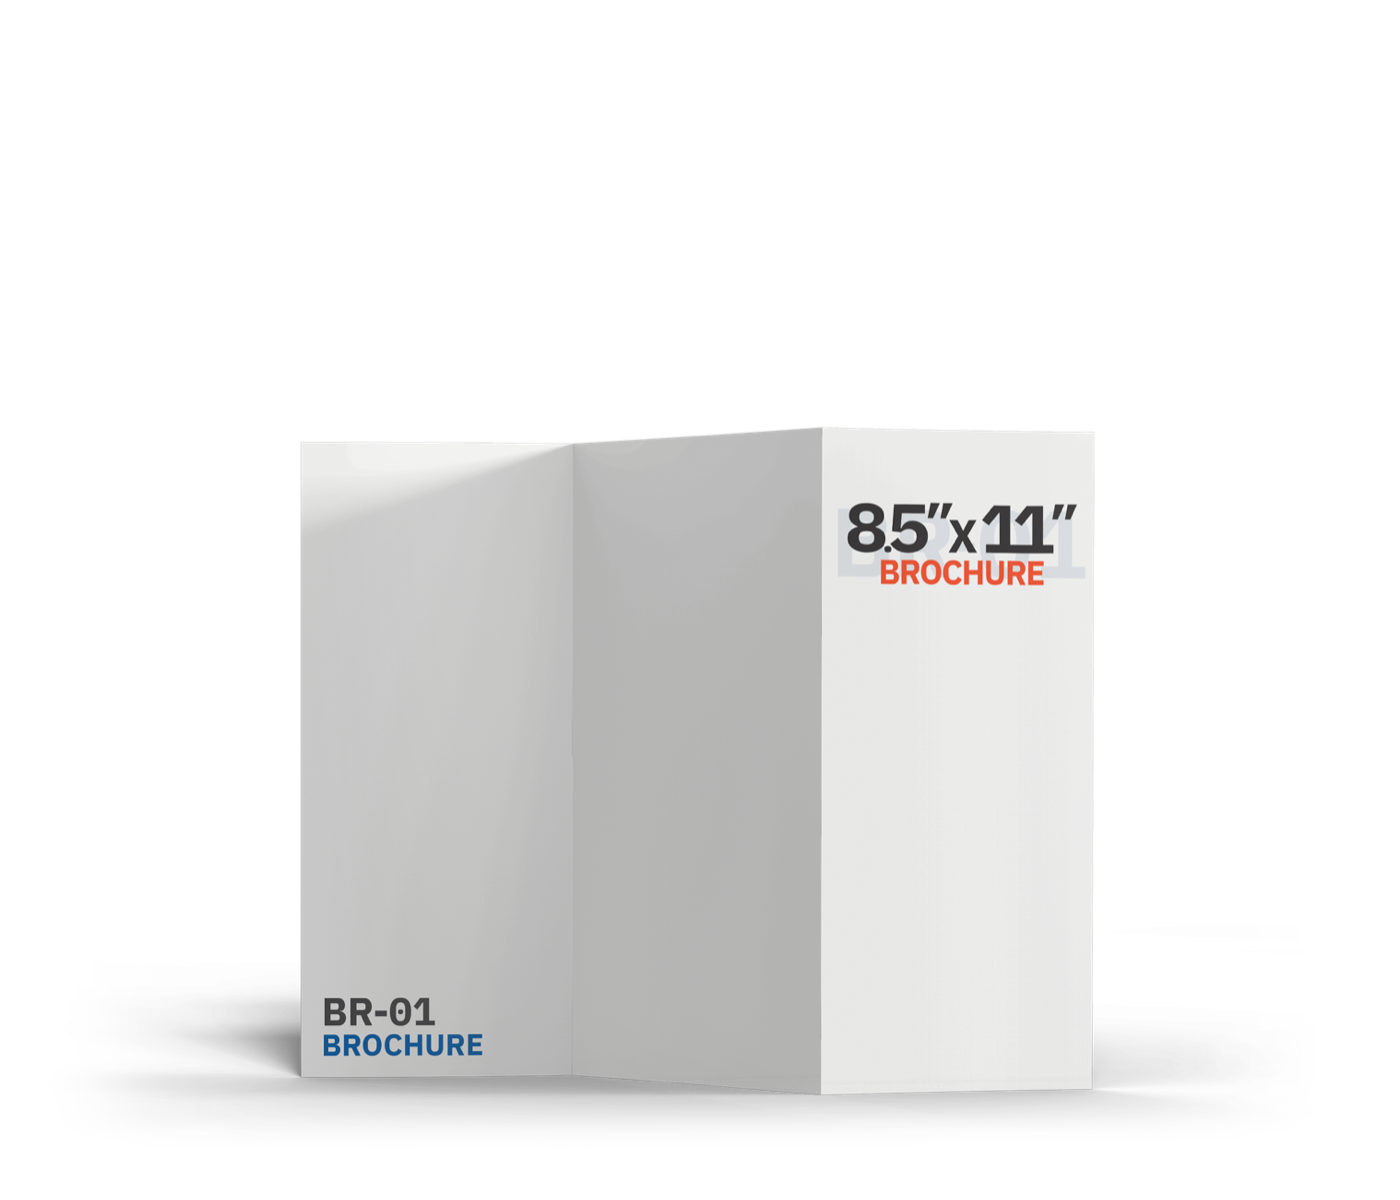 8 1/2 x 11 White Cardboard Displays With Brochure Pocket